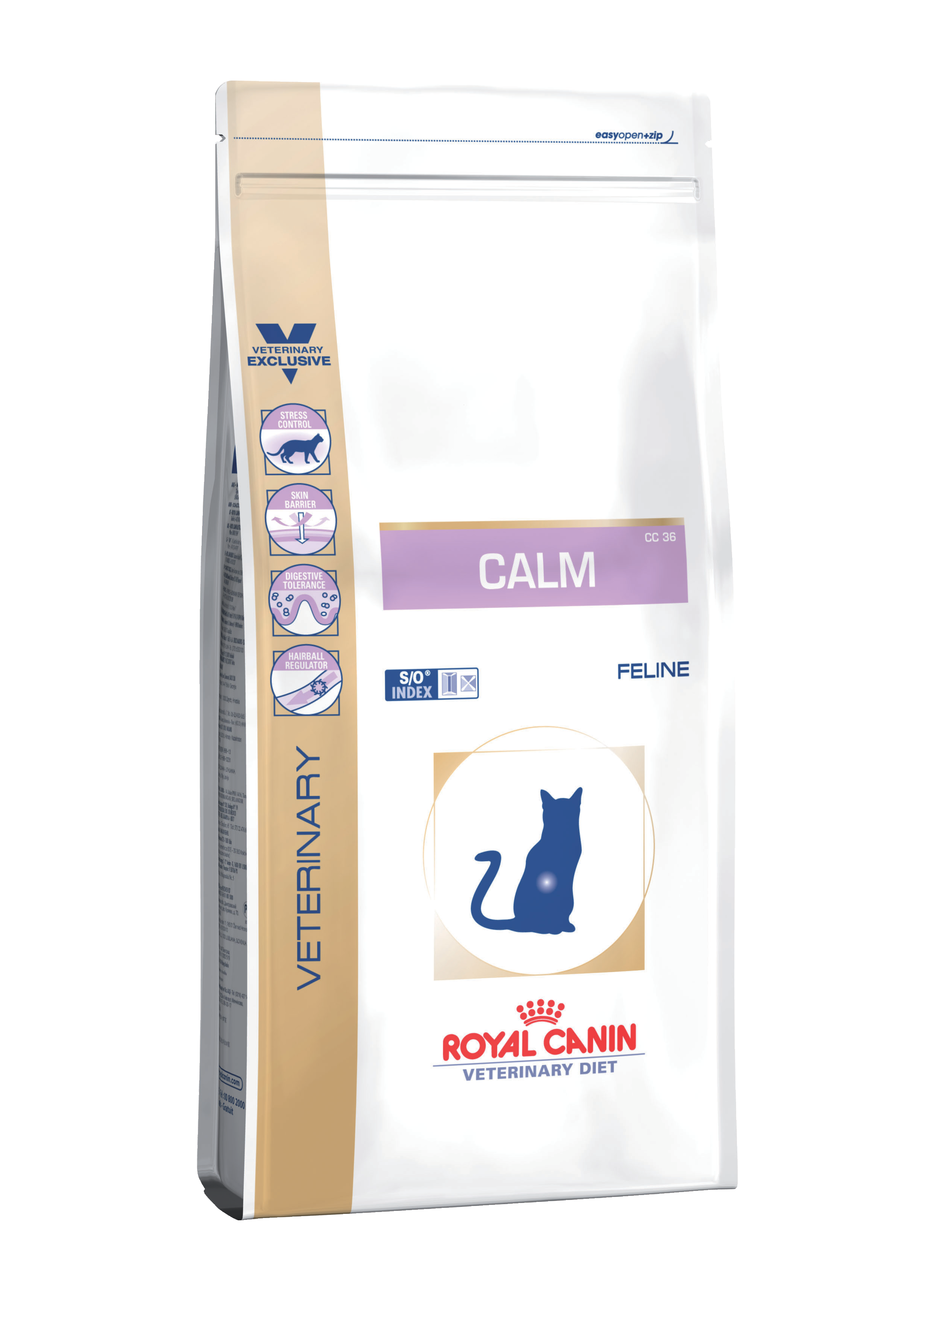 Royal canin veterinary diet cat calm 2kg